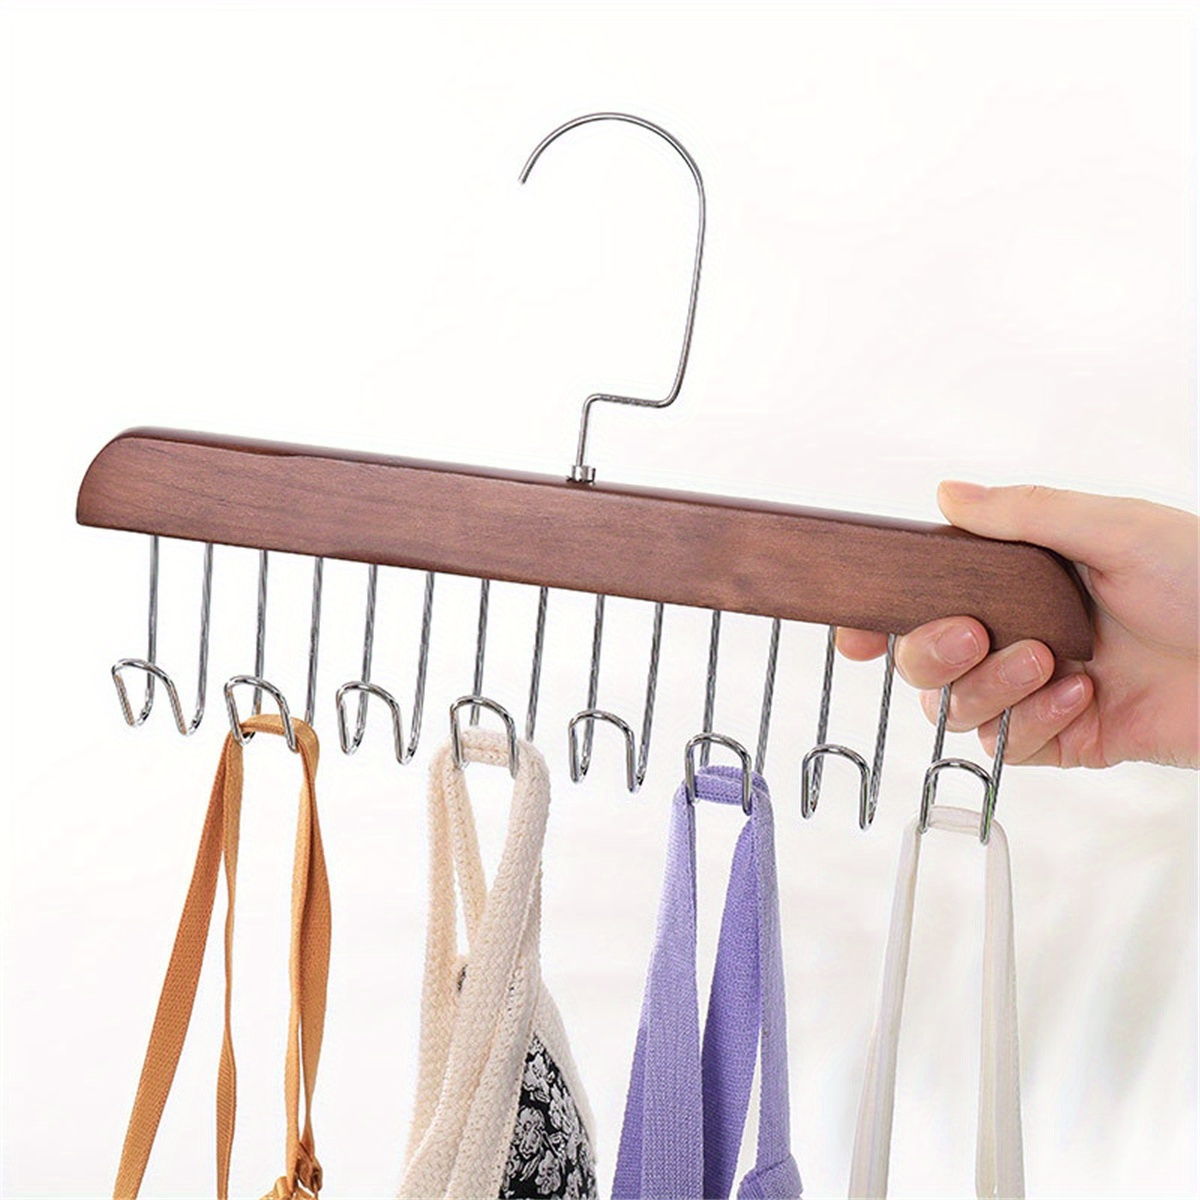 10 Hook Accessory Hanger